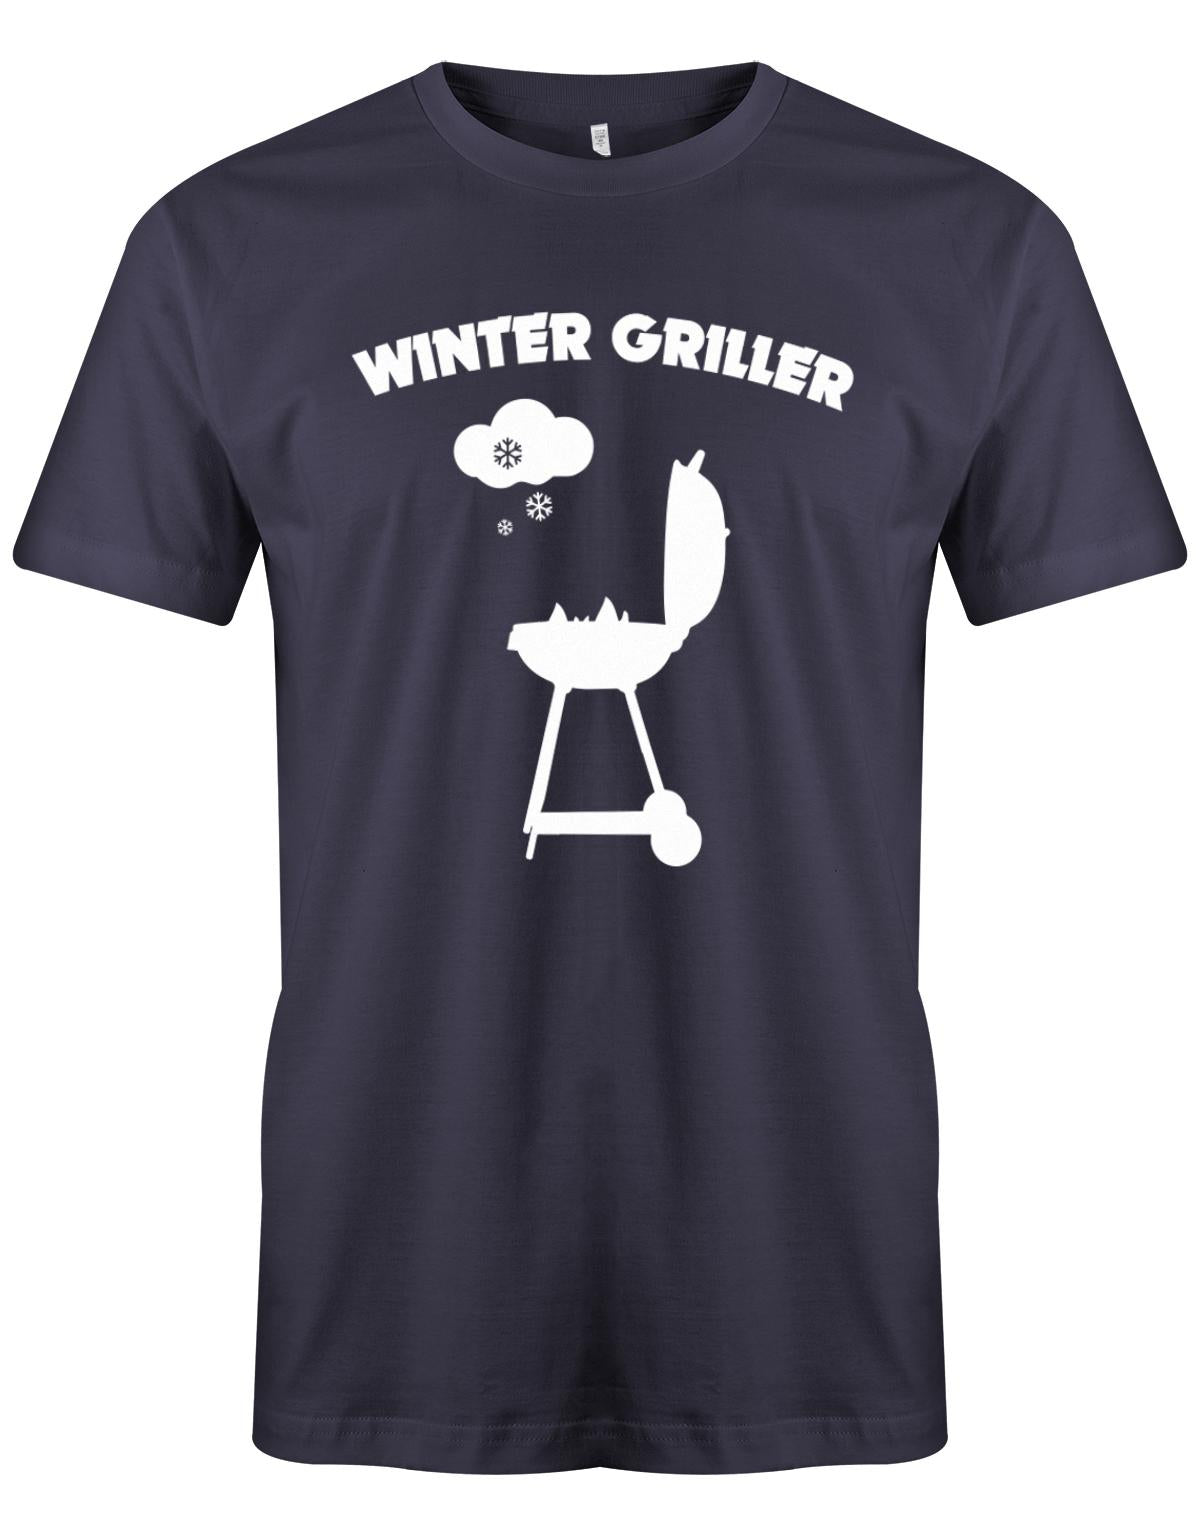 Winter-Griller-Schnee-Herren-Grill-Shirt-Navy